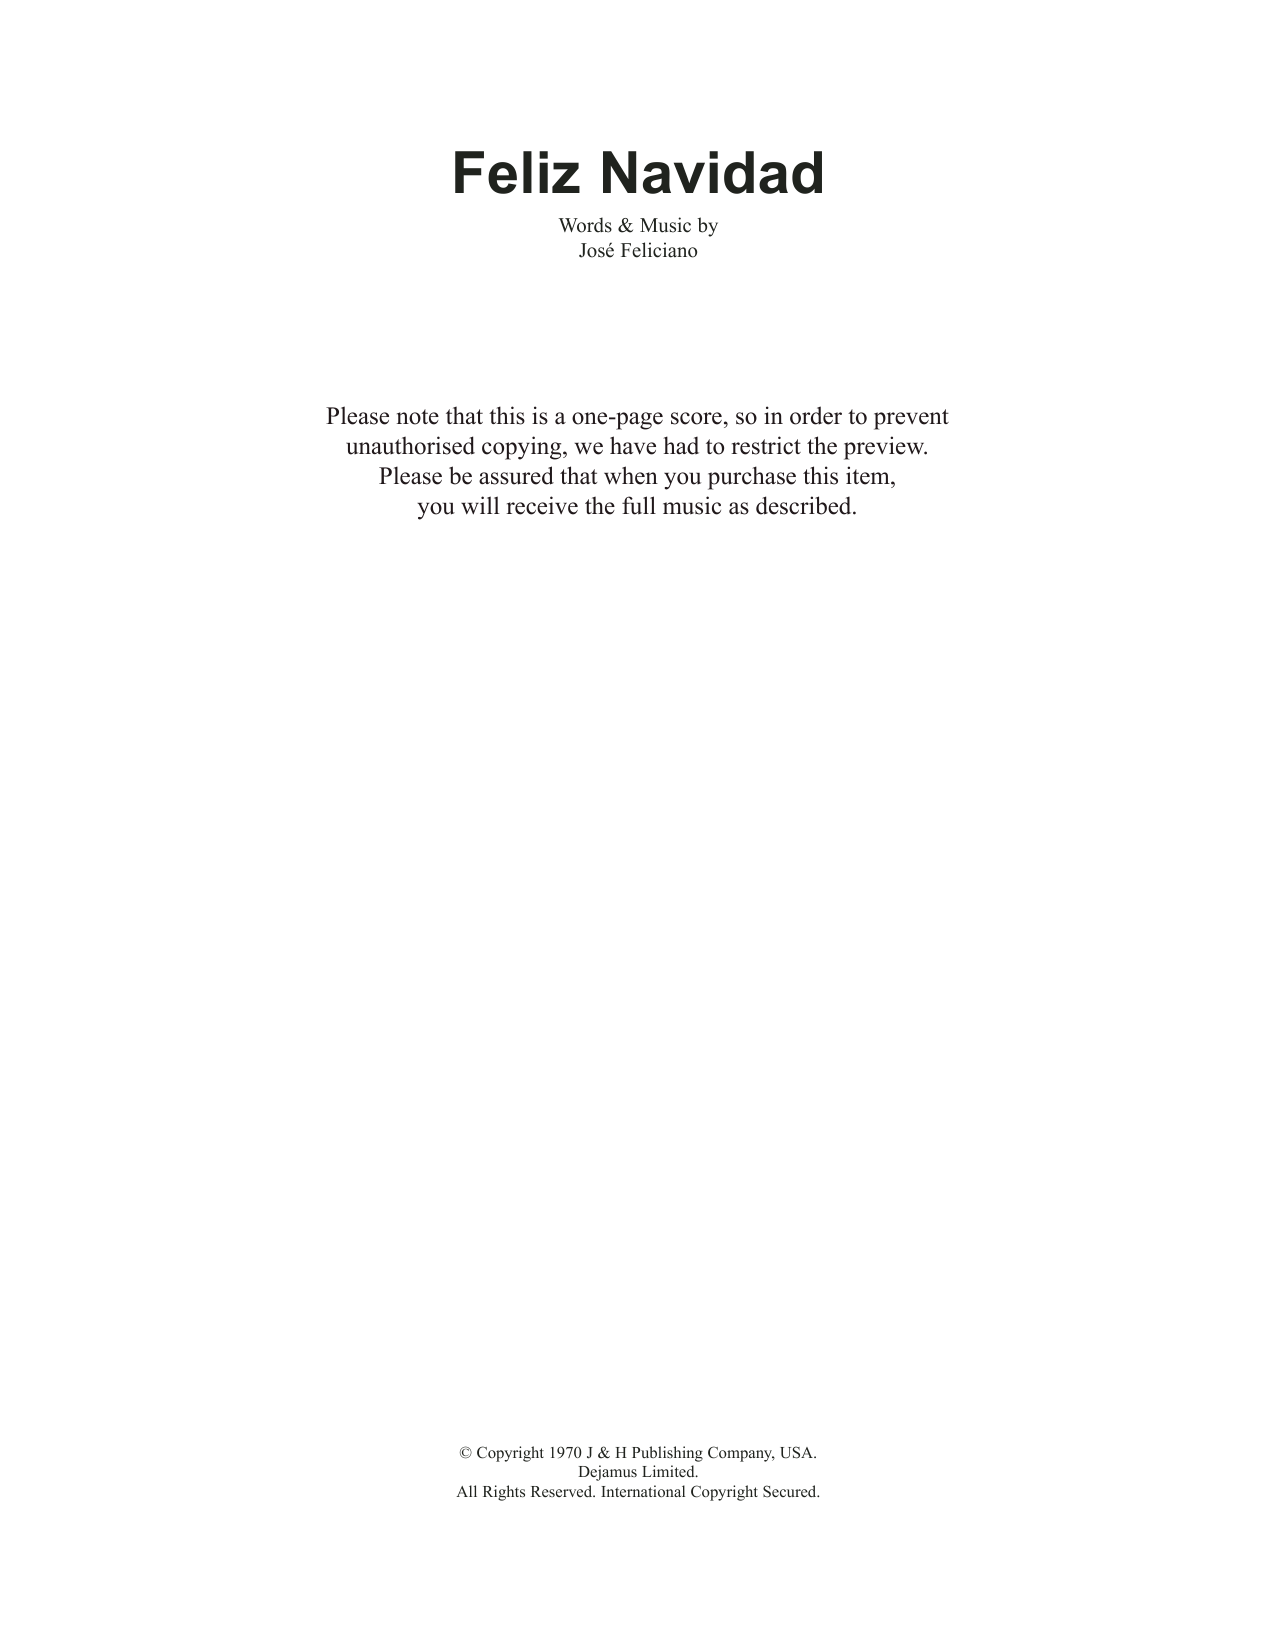 Jose Feliciano Feliz Navidad Sheet Music Notes & Chords for Voice - Download or Print PDF